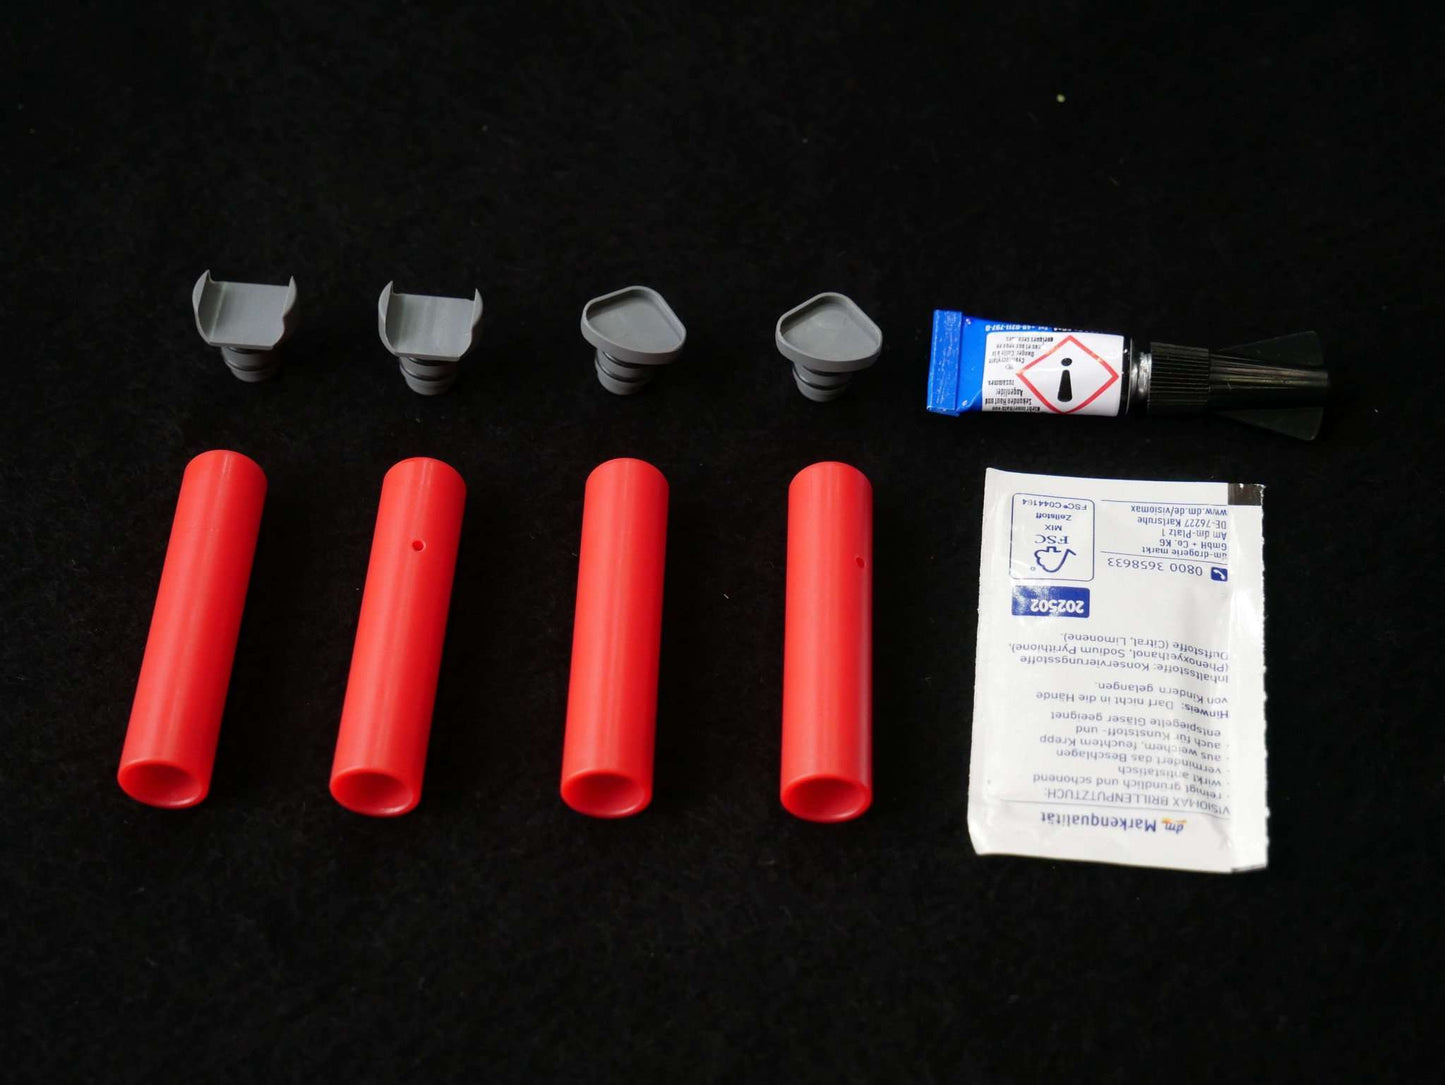 Lieferumfang Landegestell System rot: 4x Adapter, 4x Landefüße, 1x Reinigungstuch, 1 Tube Kleber